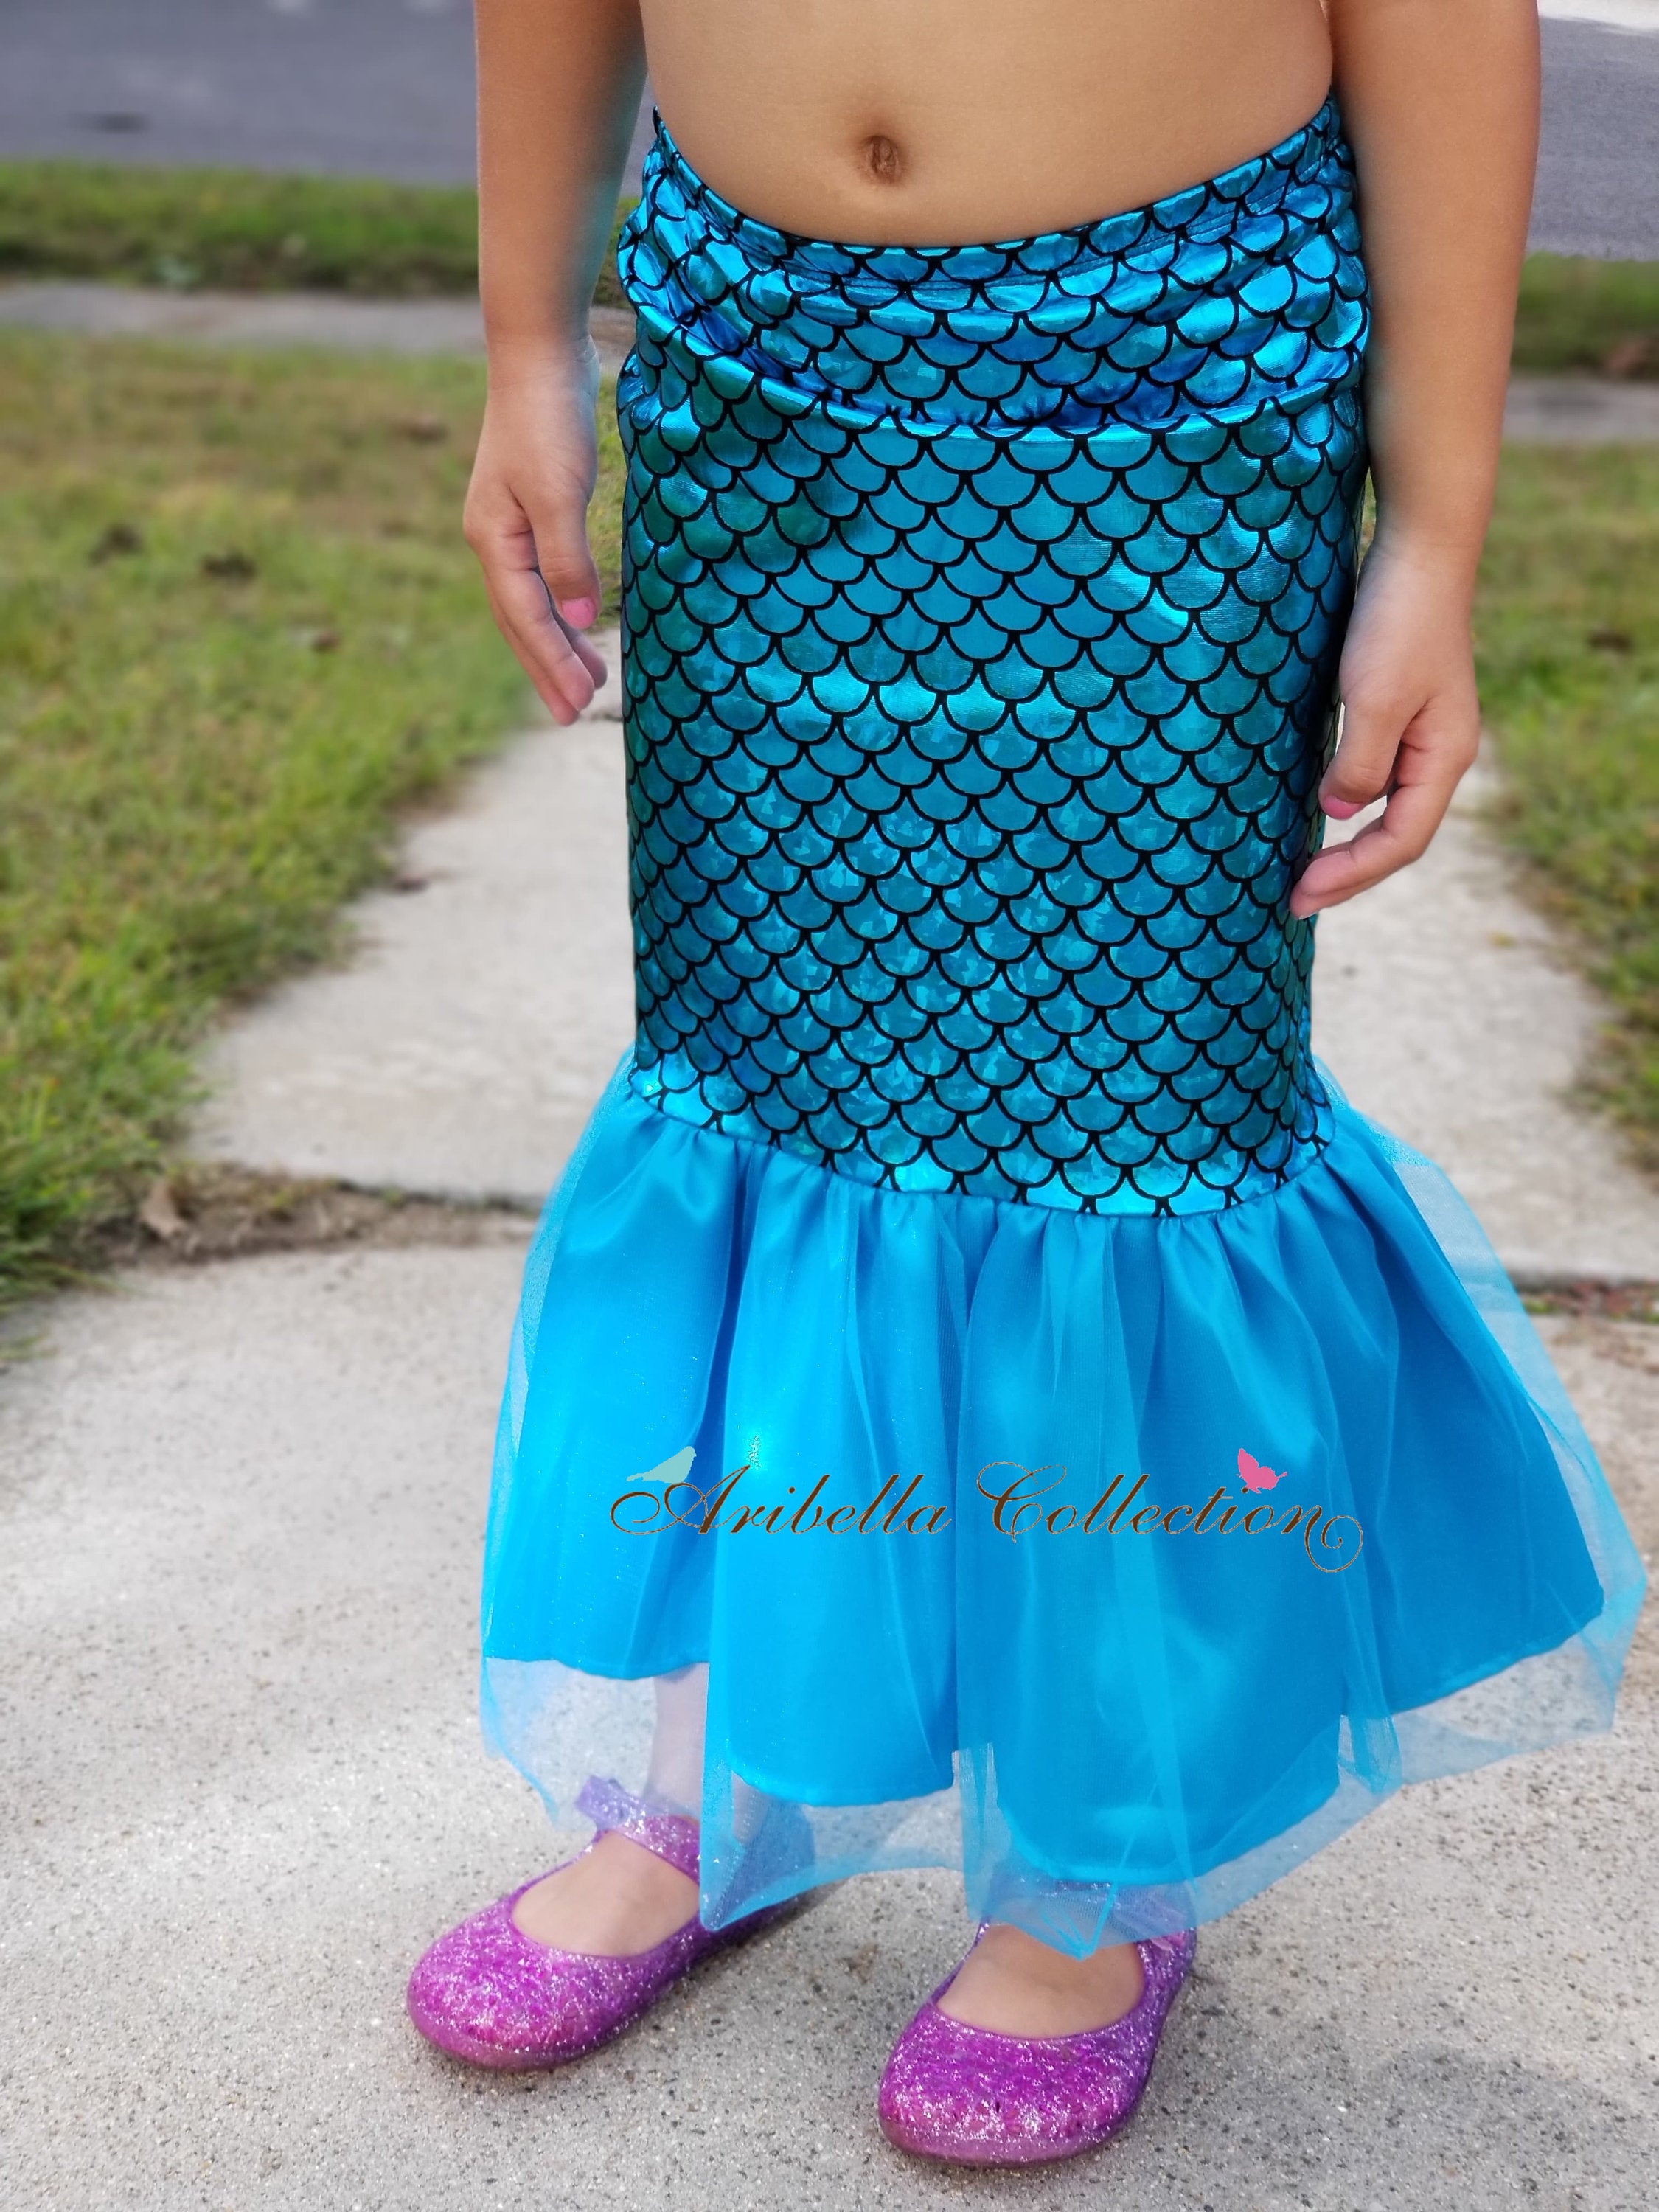 Mermaid Walkable Tail Skirt - Aqua Blue, Emerald Green, or Iridescent